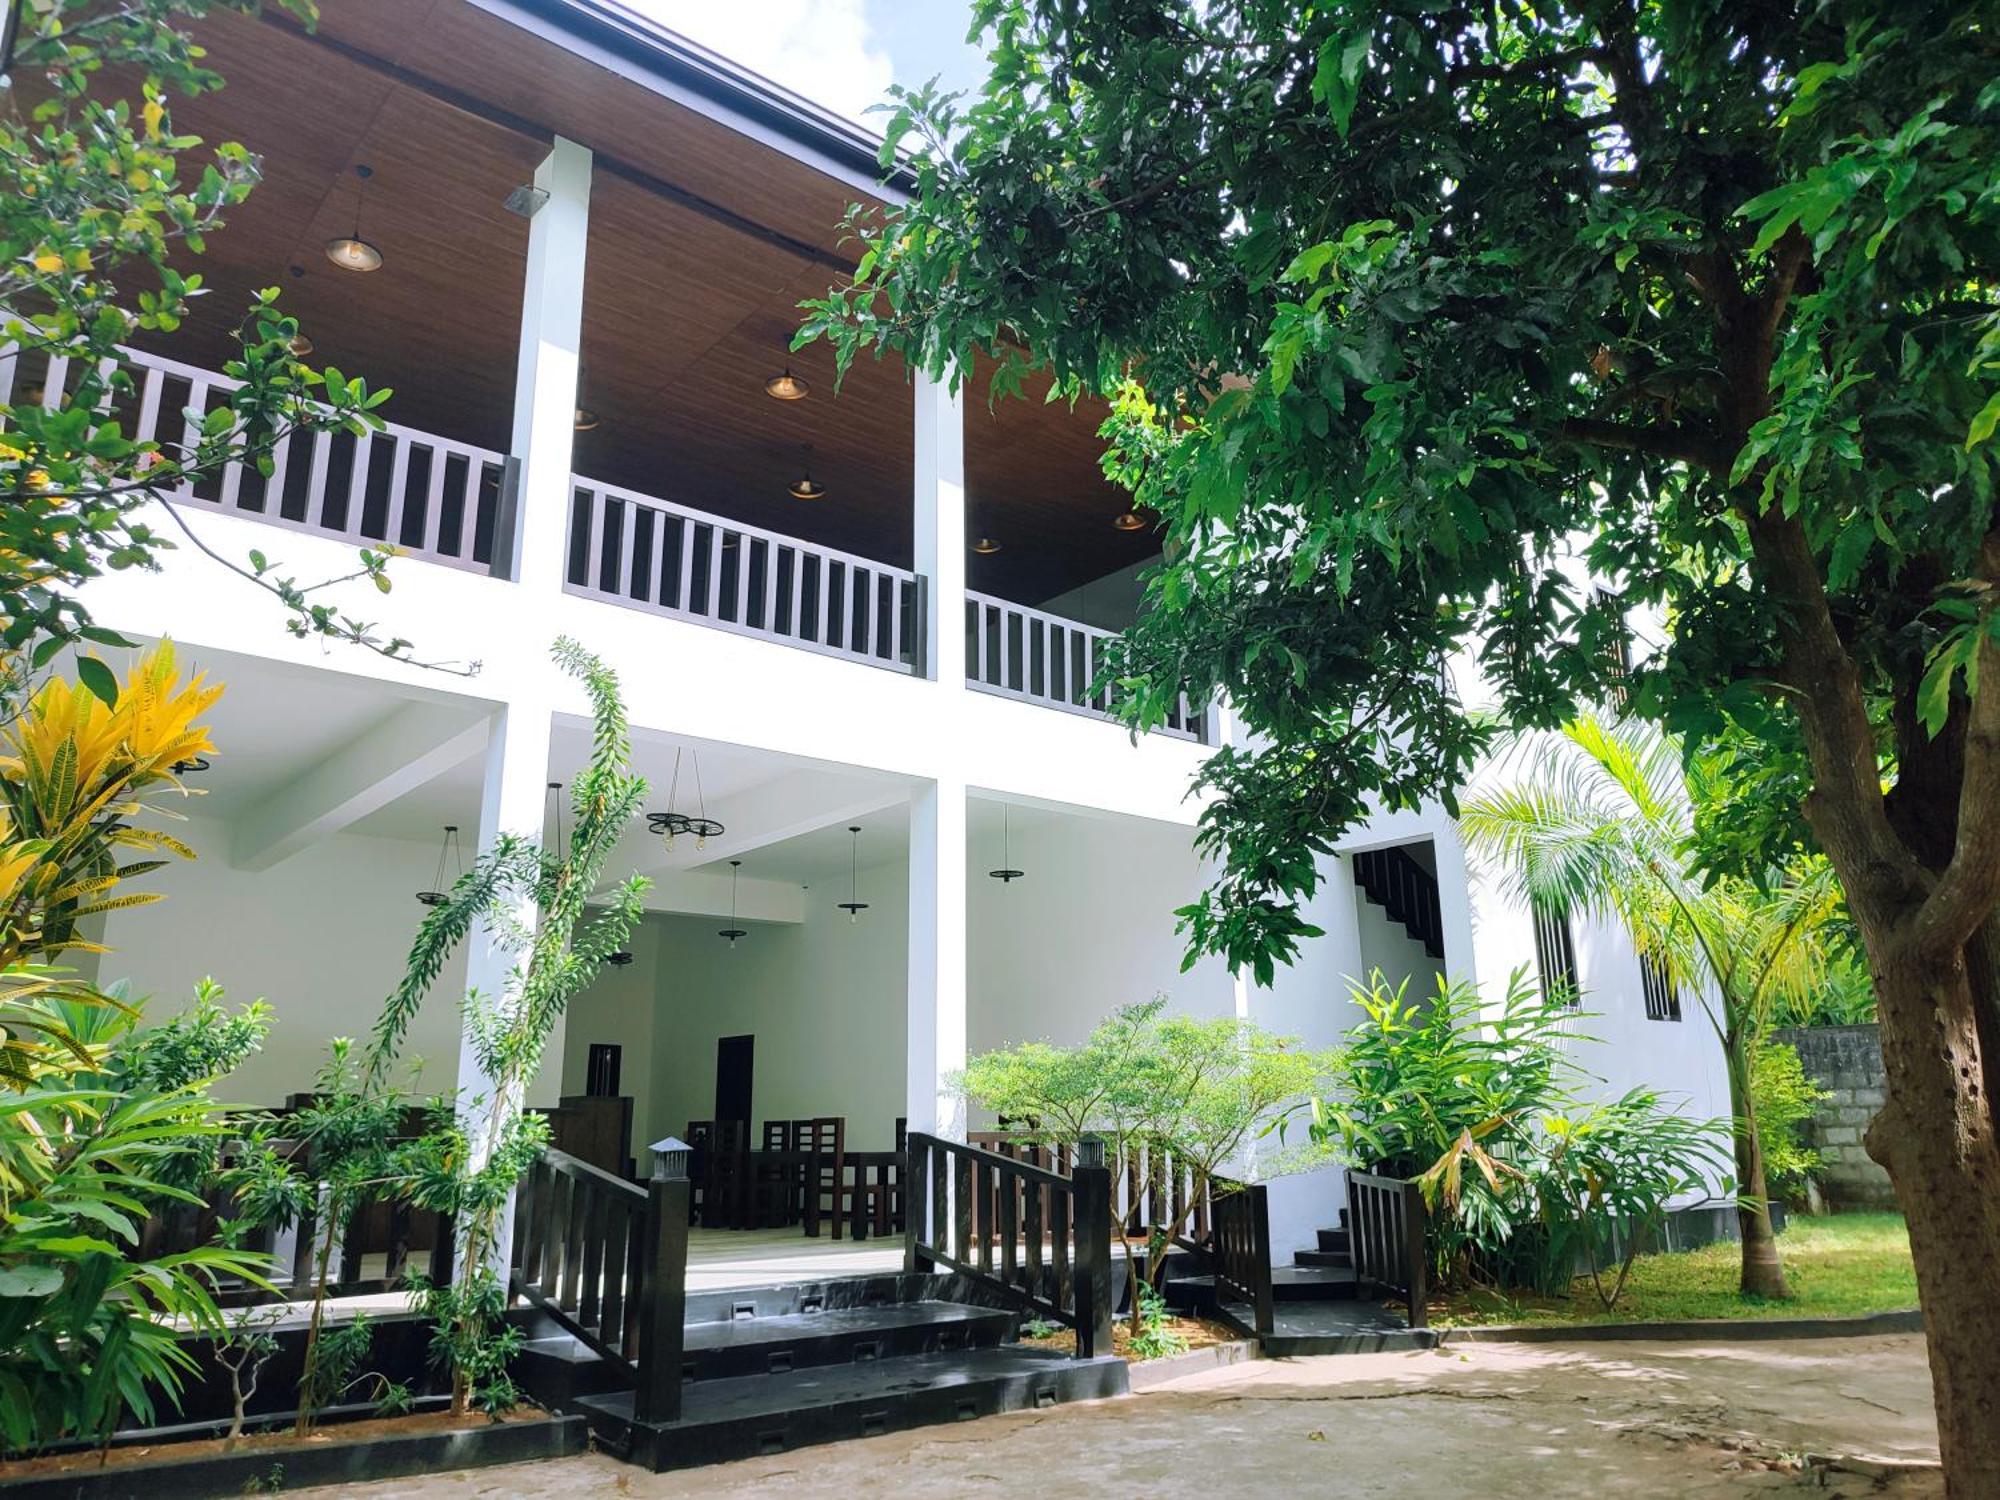 Lakmini Lodge Sigiriya Exterior foto